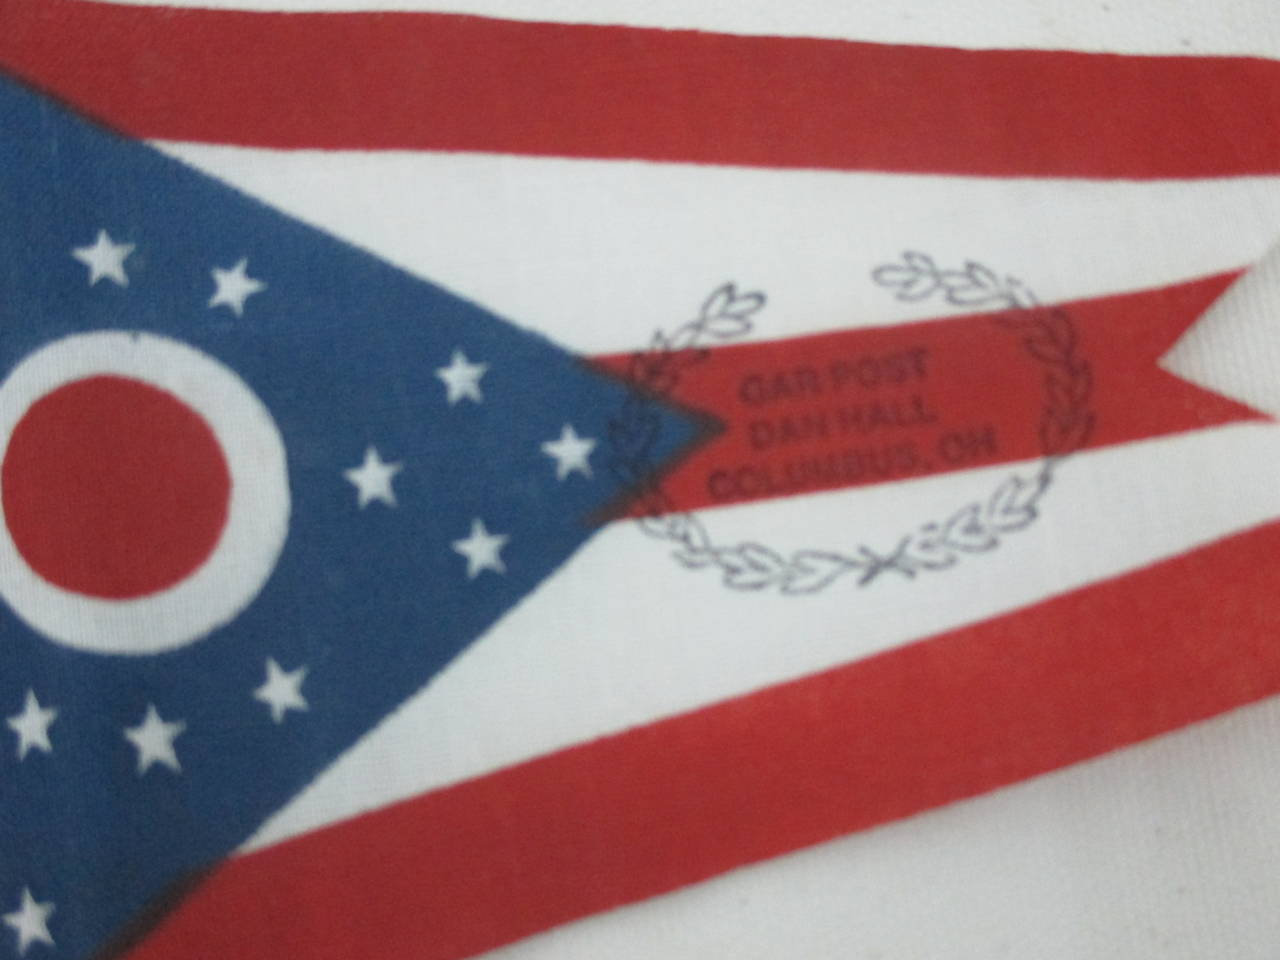 Cotton Ohio Parade Flag with GAR Overprinting